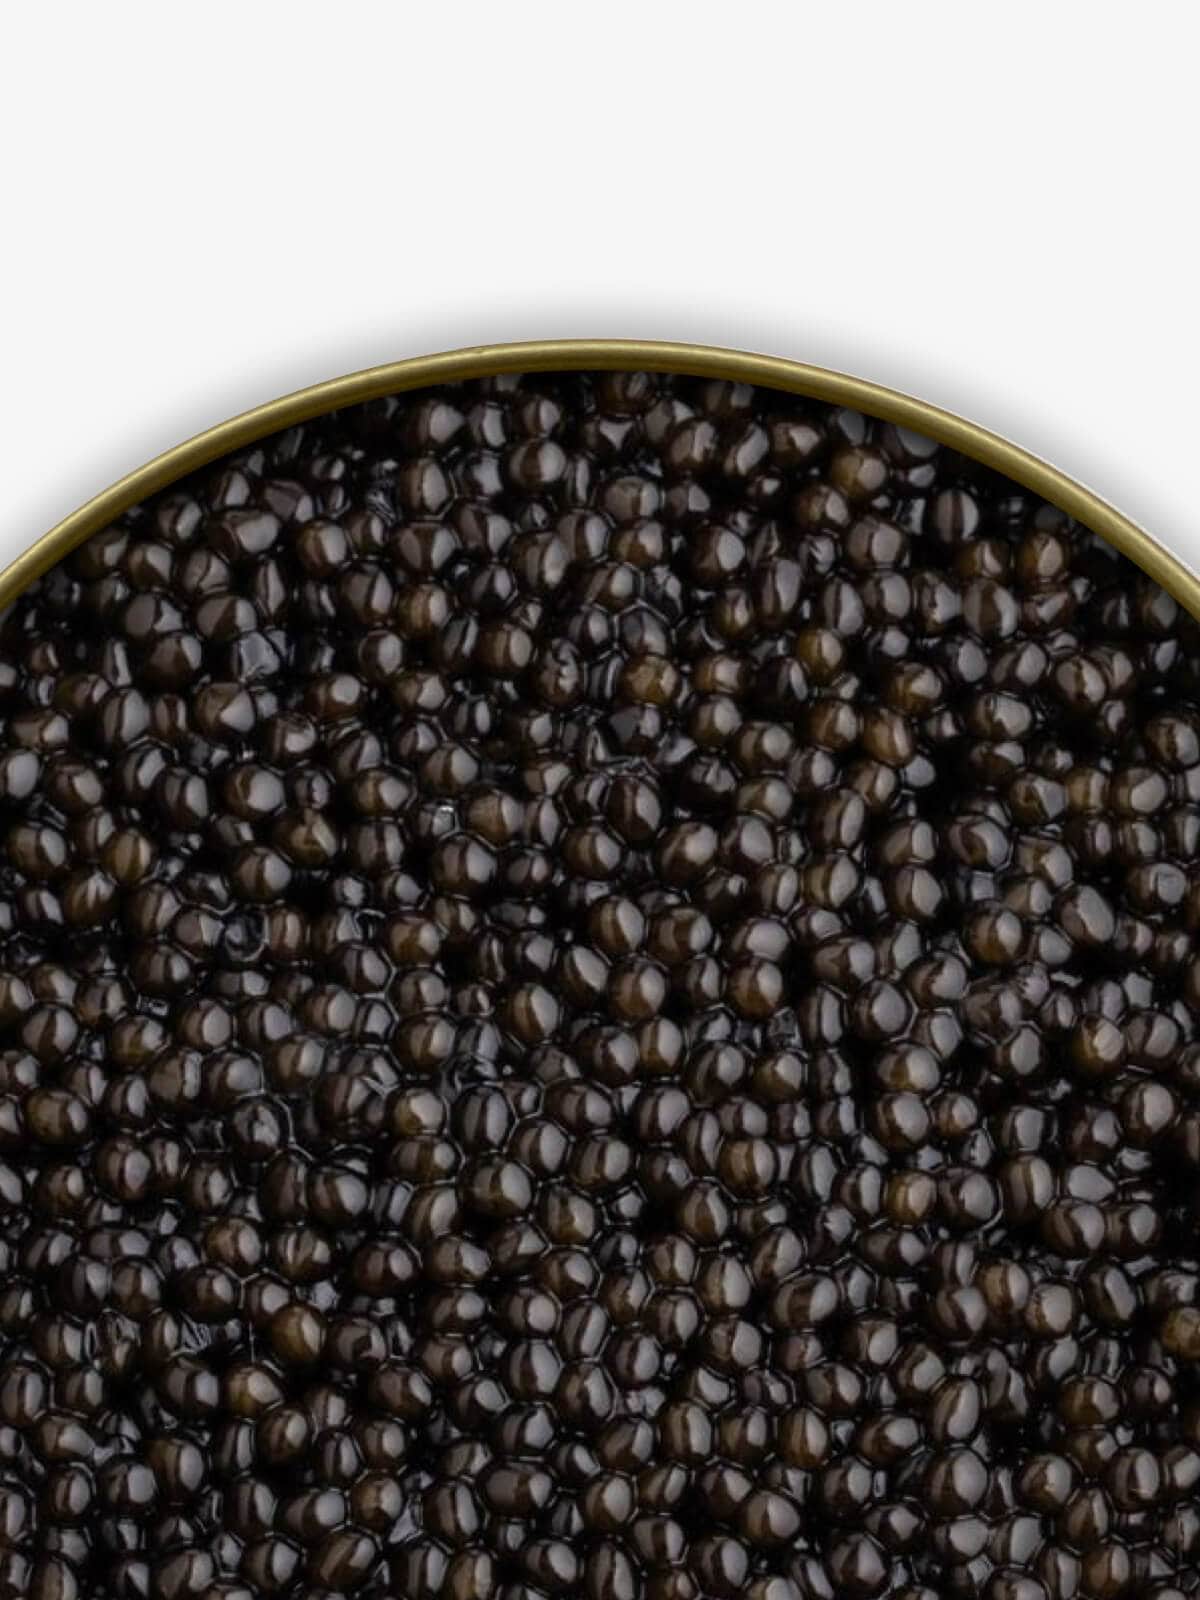 “KING GRADE” Beluga Sturgeon Caviar - Caviar Skazka